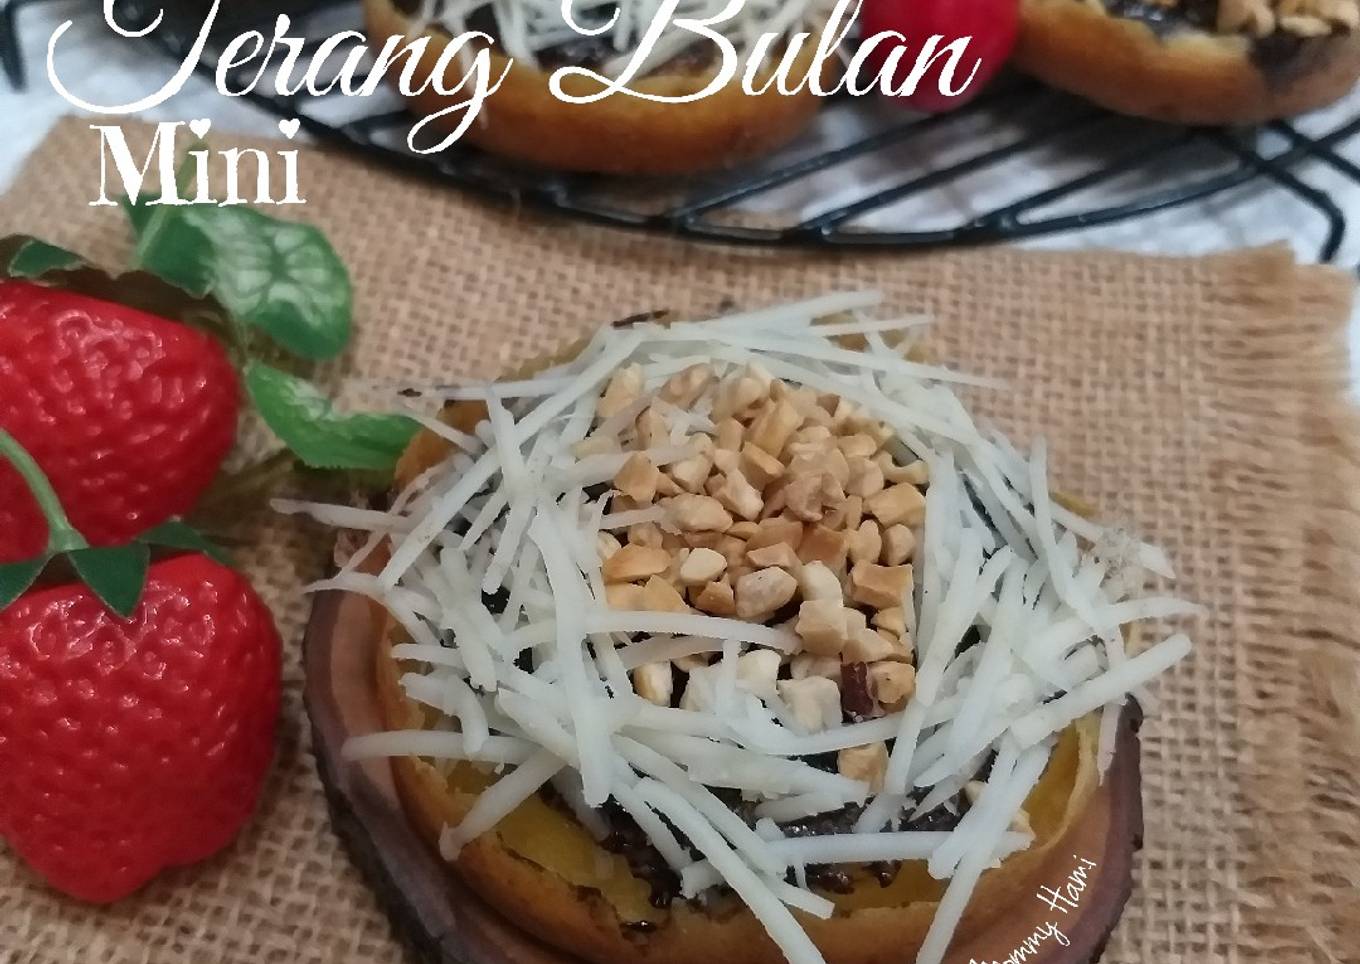 Martabak Manis| Martabak Manis Mini | Terang Bulan Mini - resep kuliner nusantara